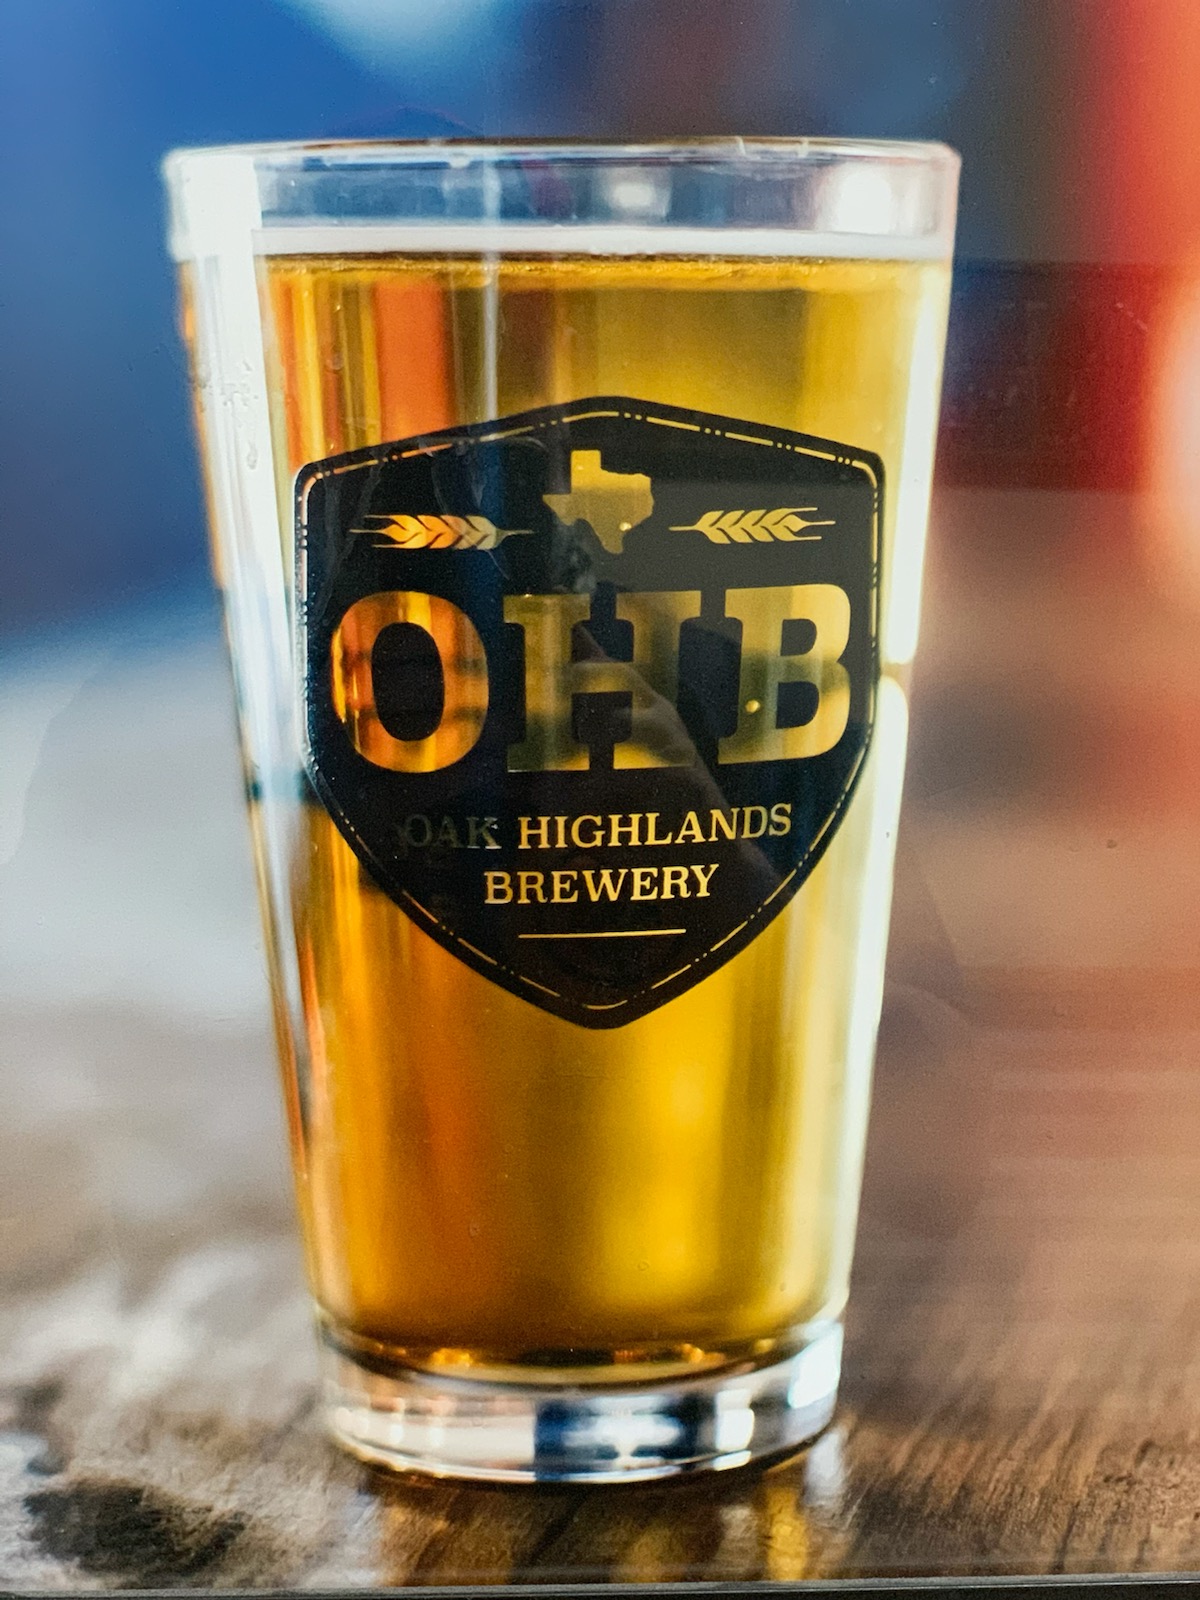 Oak Highlands Brewery: In My Neighborhood - Best Beer Near Me